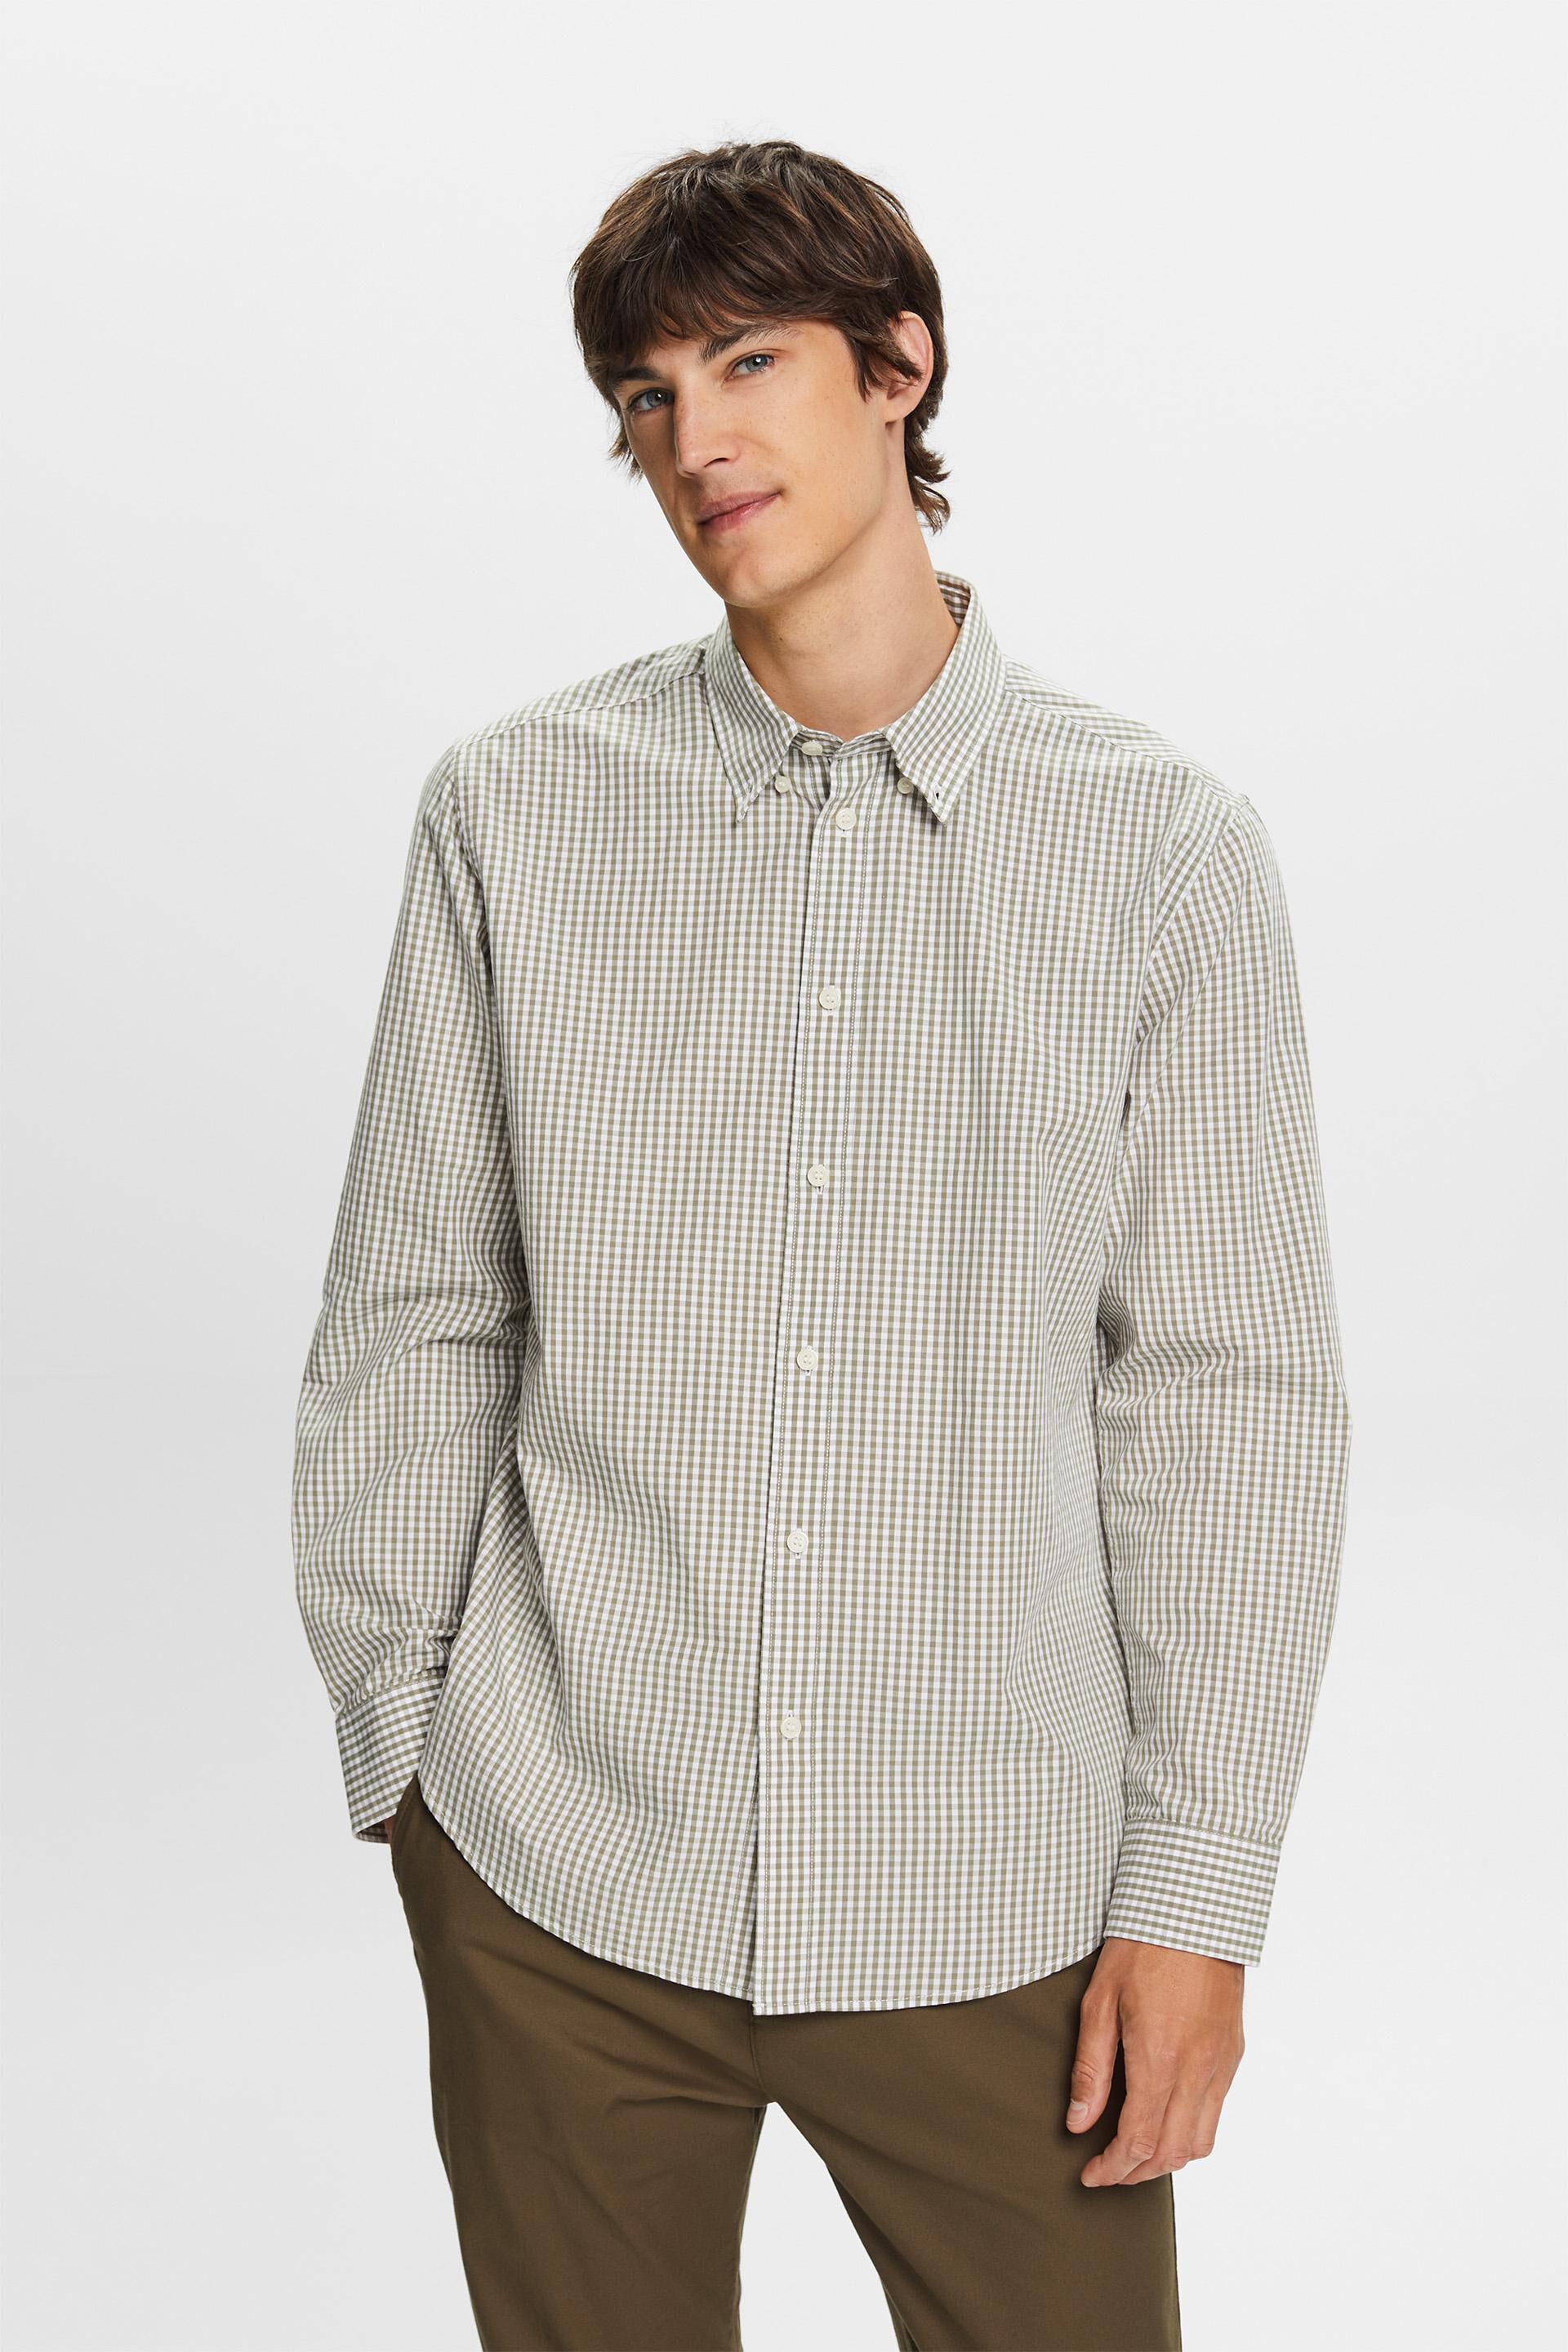 Esprit 100% shirt, cotton Vichy button-down